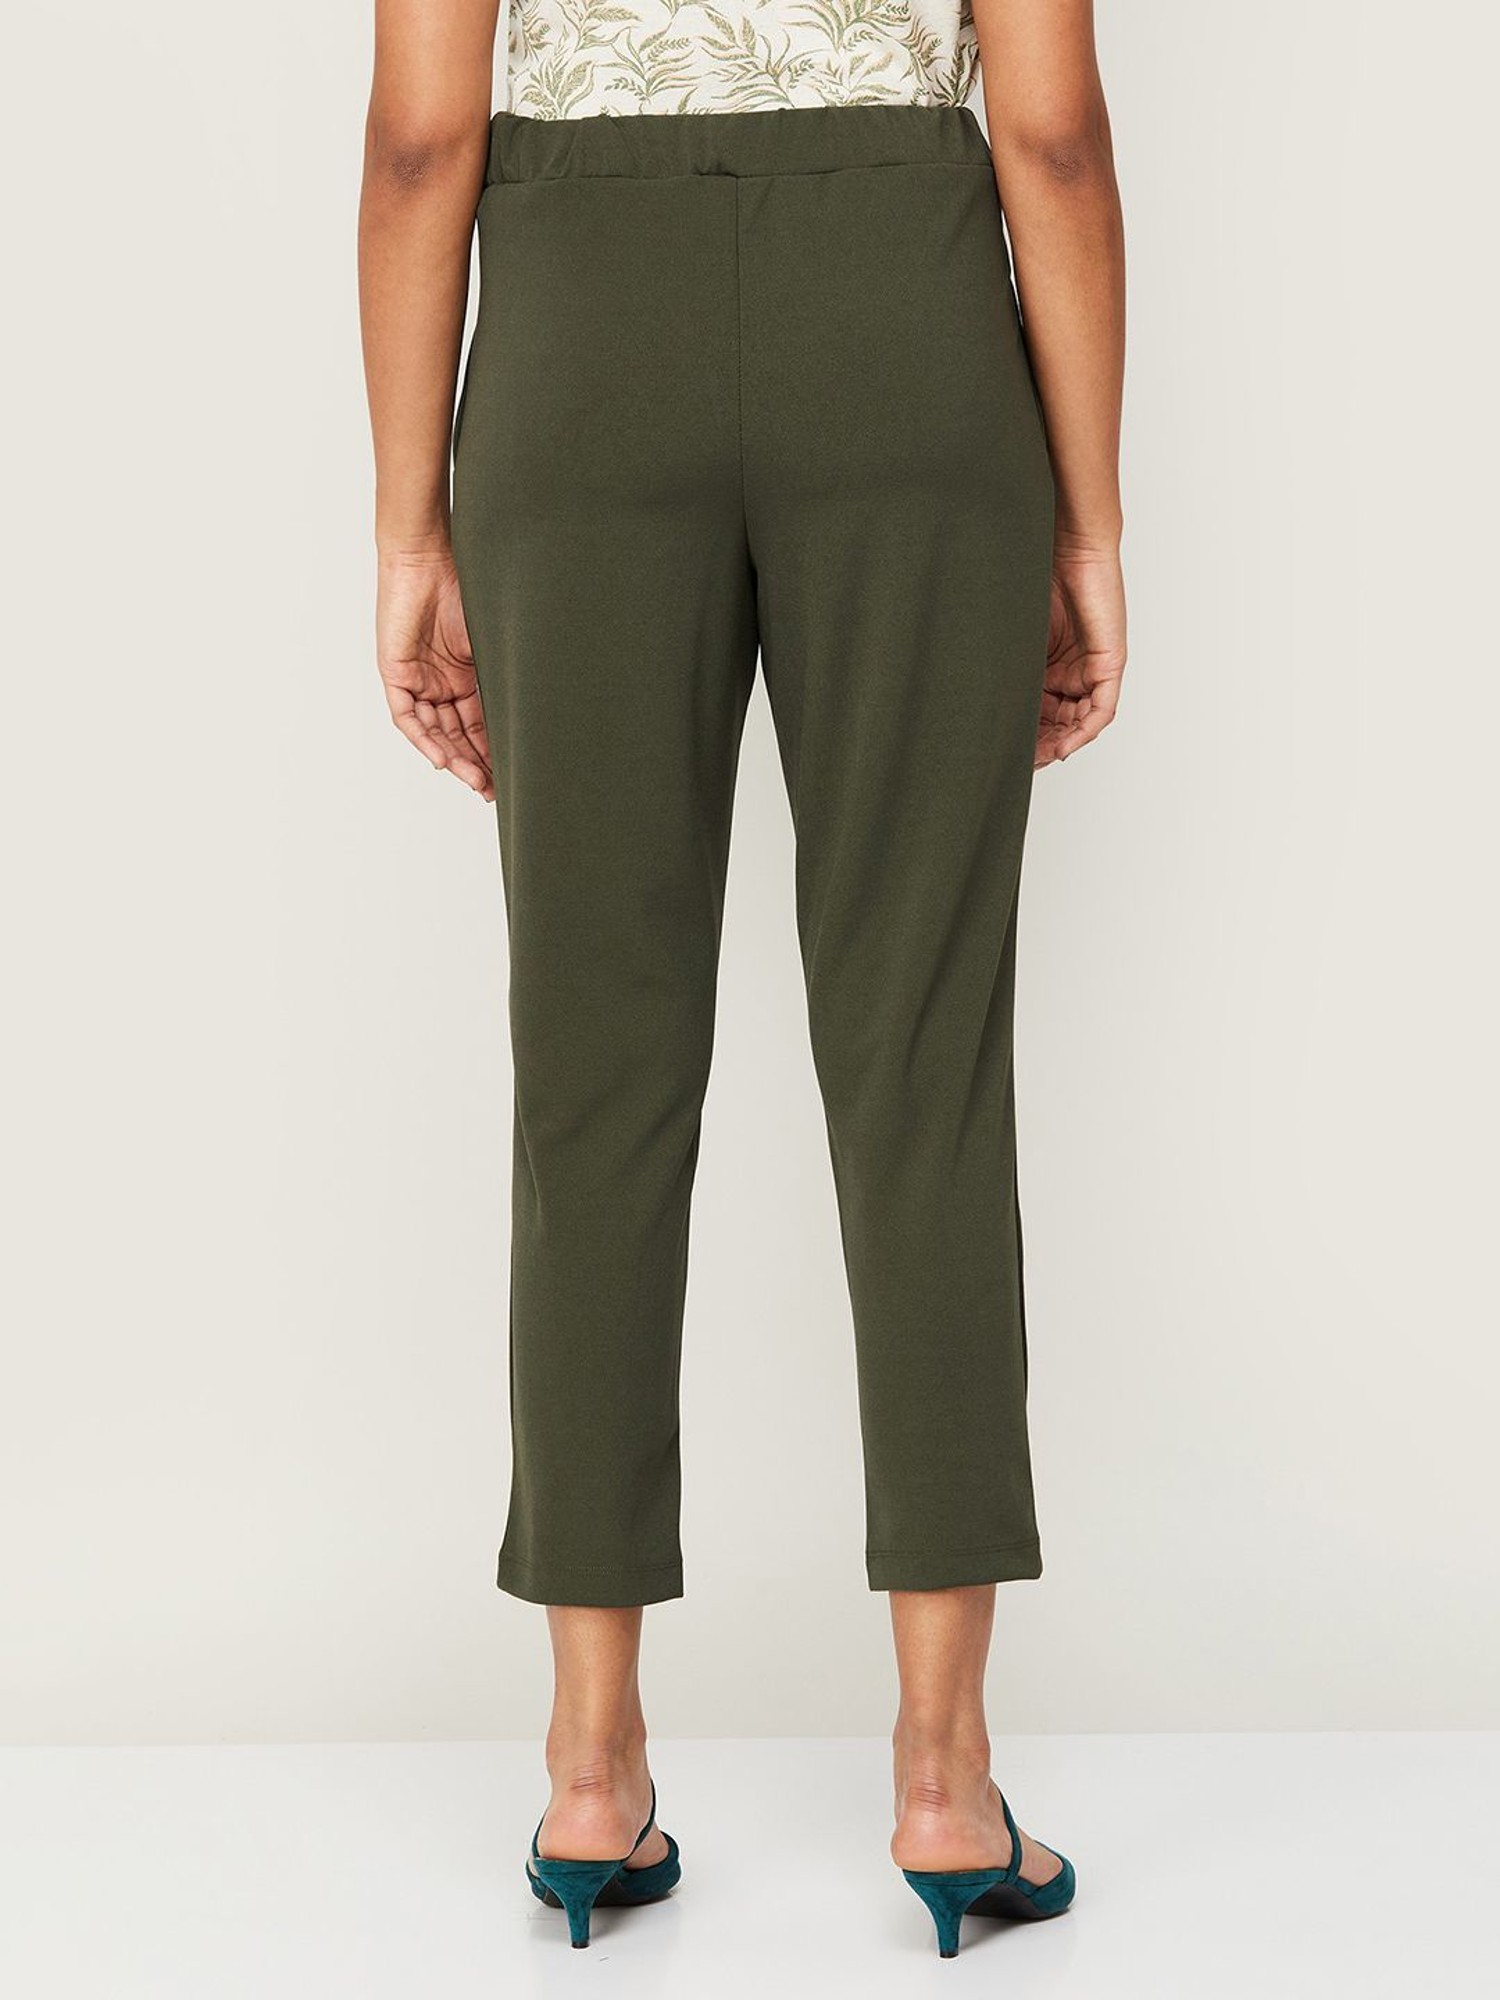 Buy Olive Green Color Bottomwear Casual Wear Earthy Green Smart Pants  Clothing for Boy Jollee